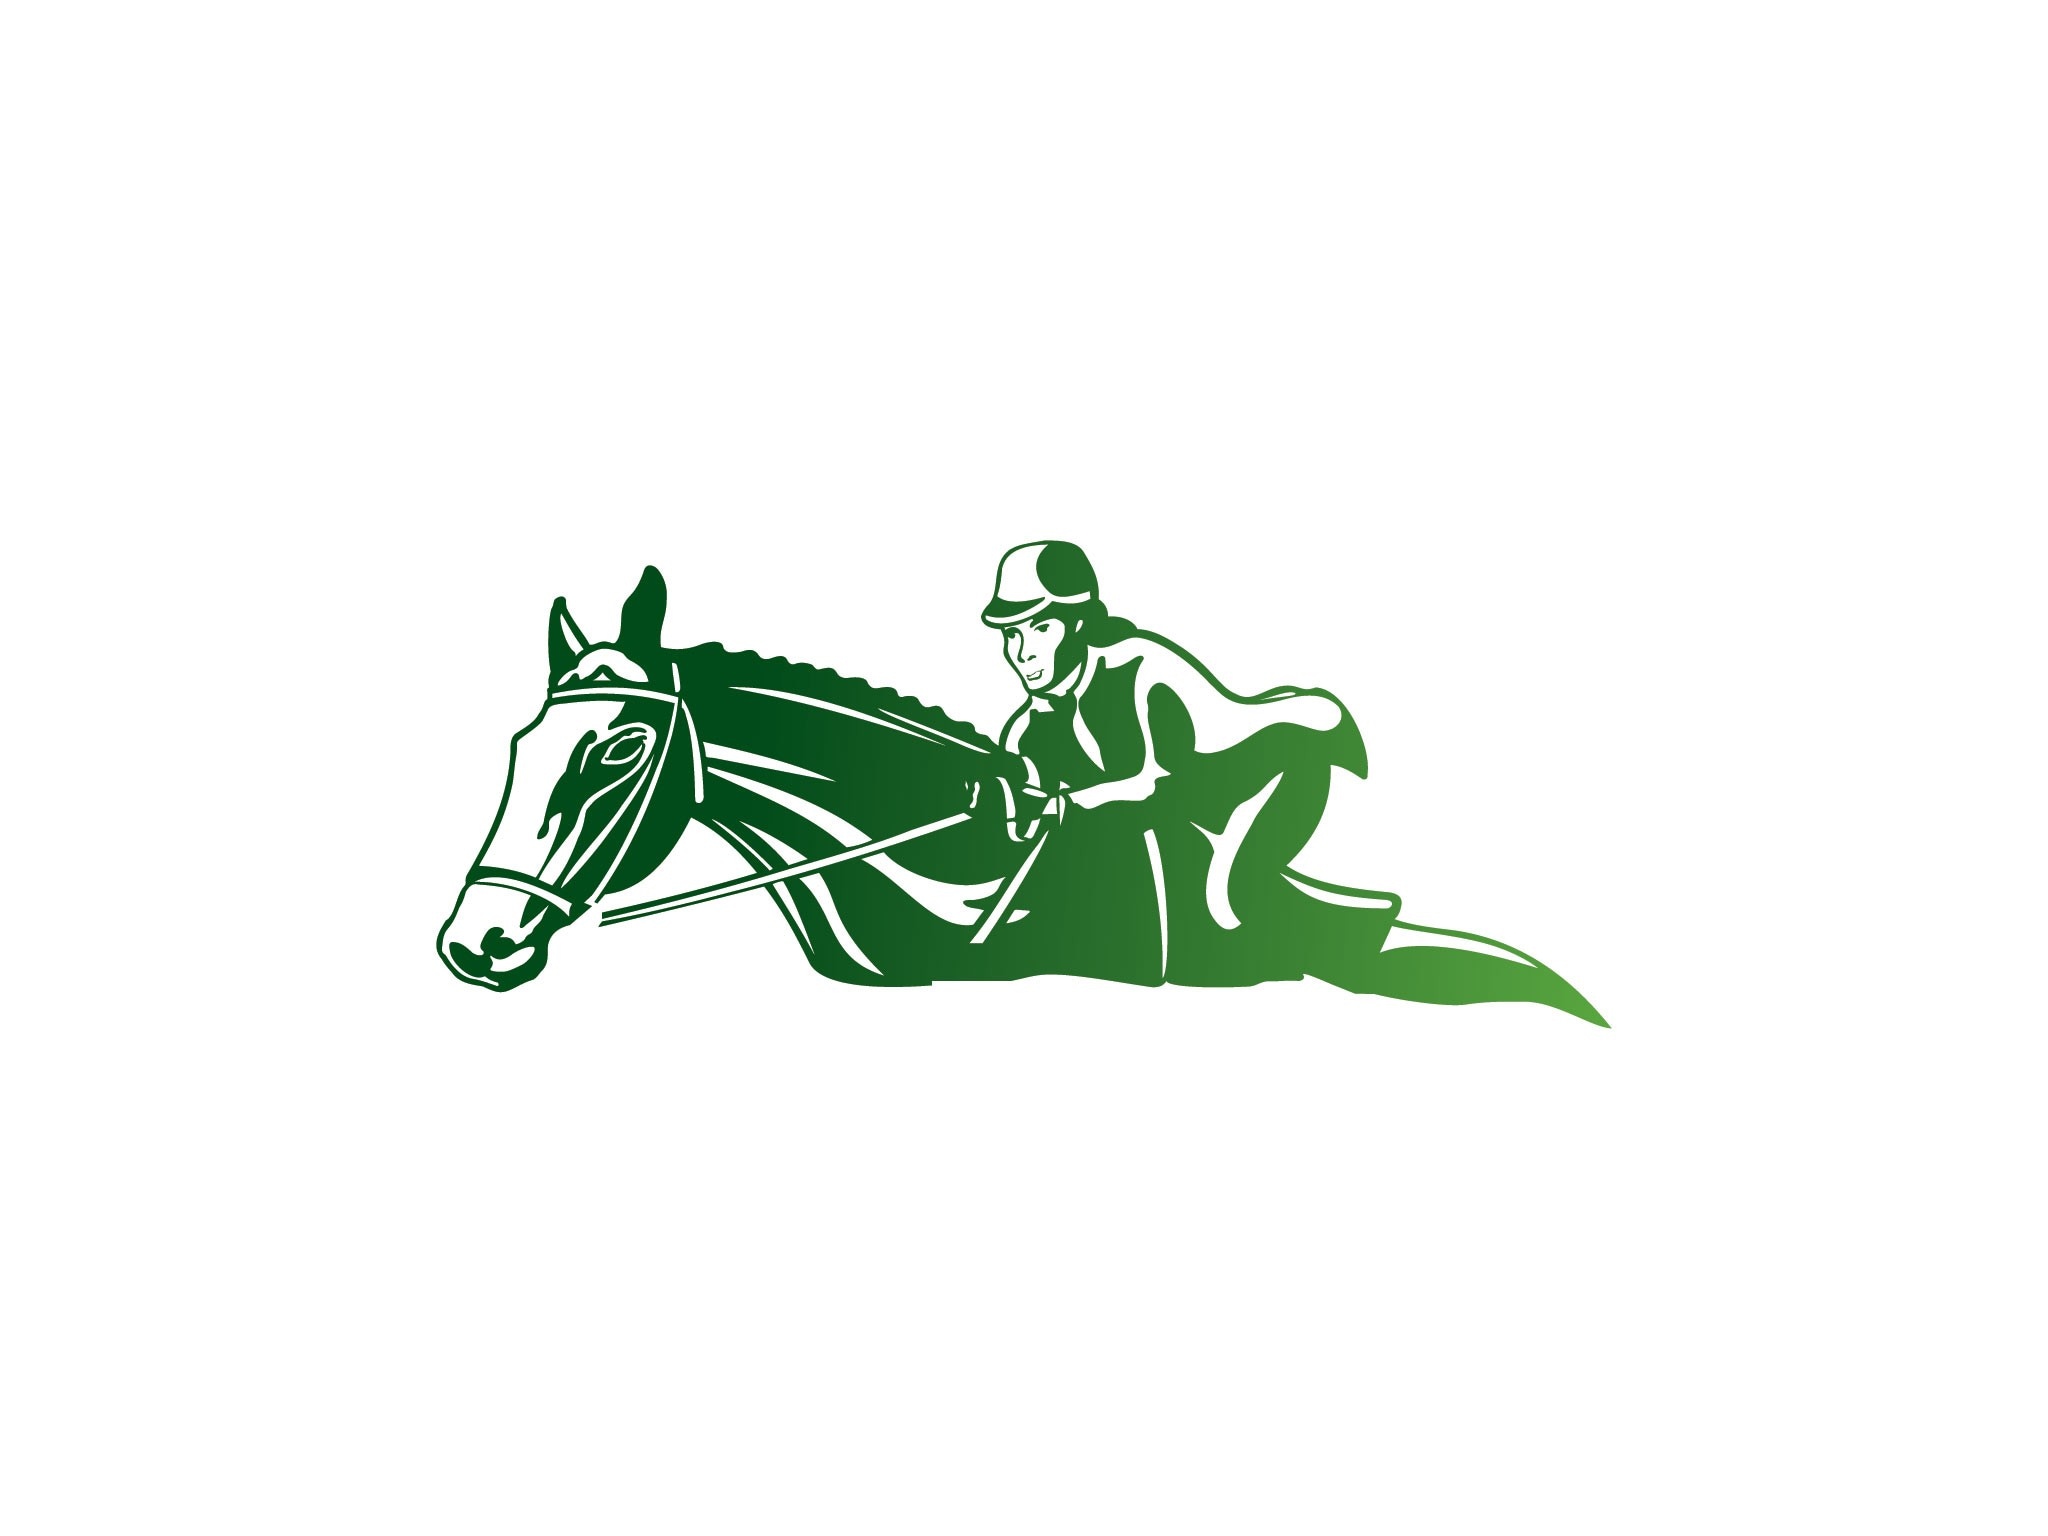 Horse & Rider Logo